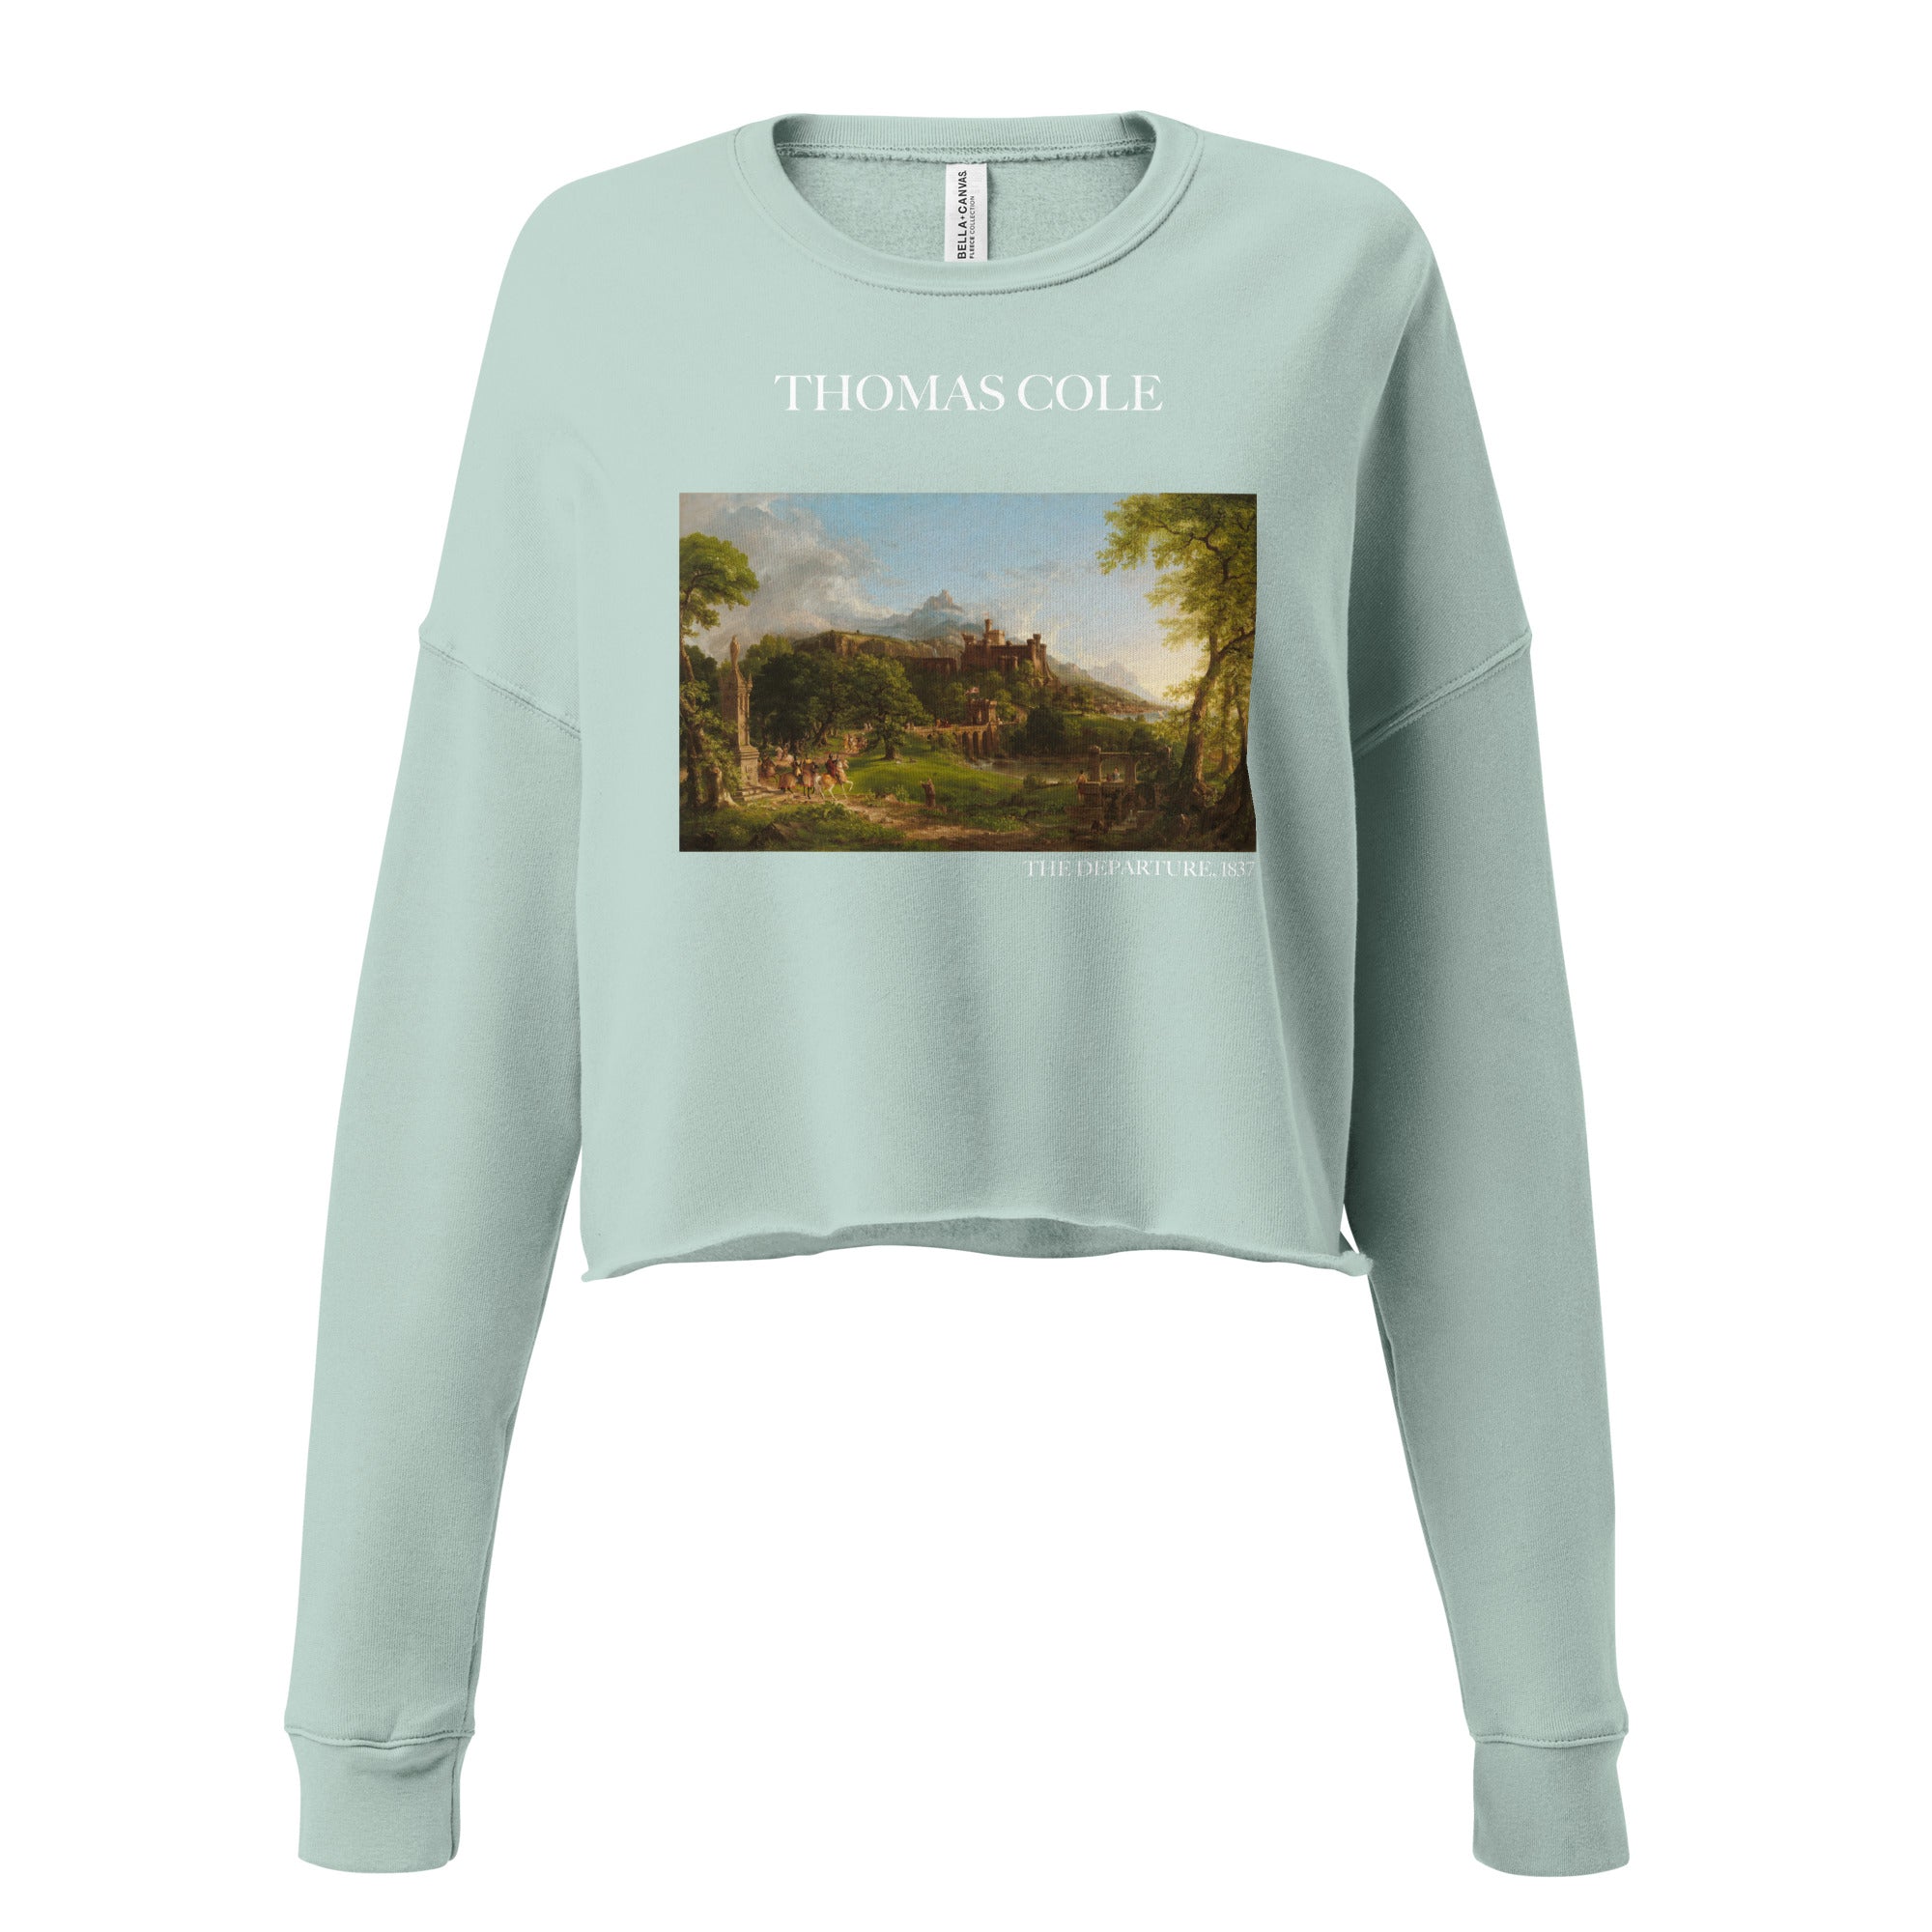 Thomas Cole 'The Departure' Famous Painting Cropped Sweatshirt | Premium Art Cropped Sweatshirt